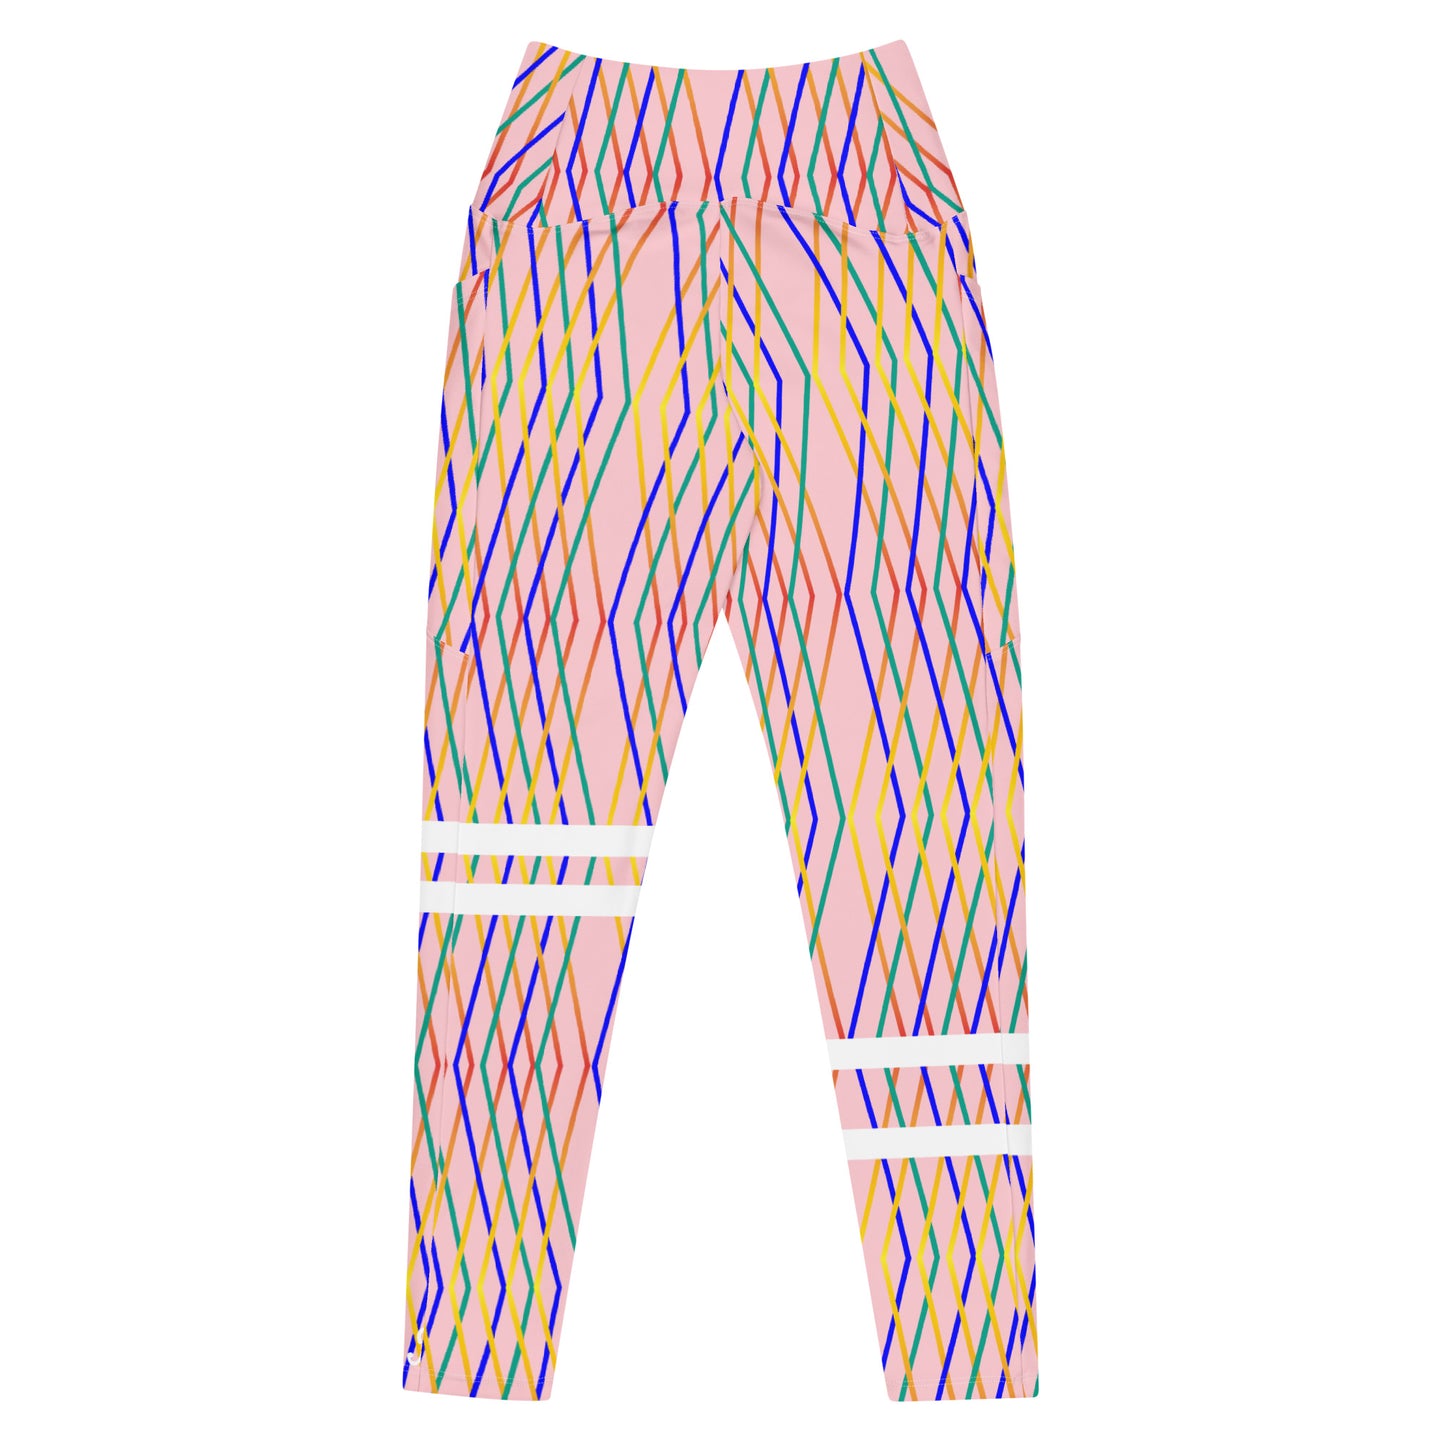 AfriBix Pink Constellation Print Leggings with pockets